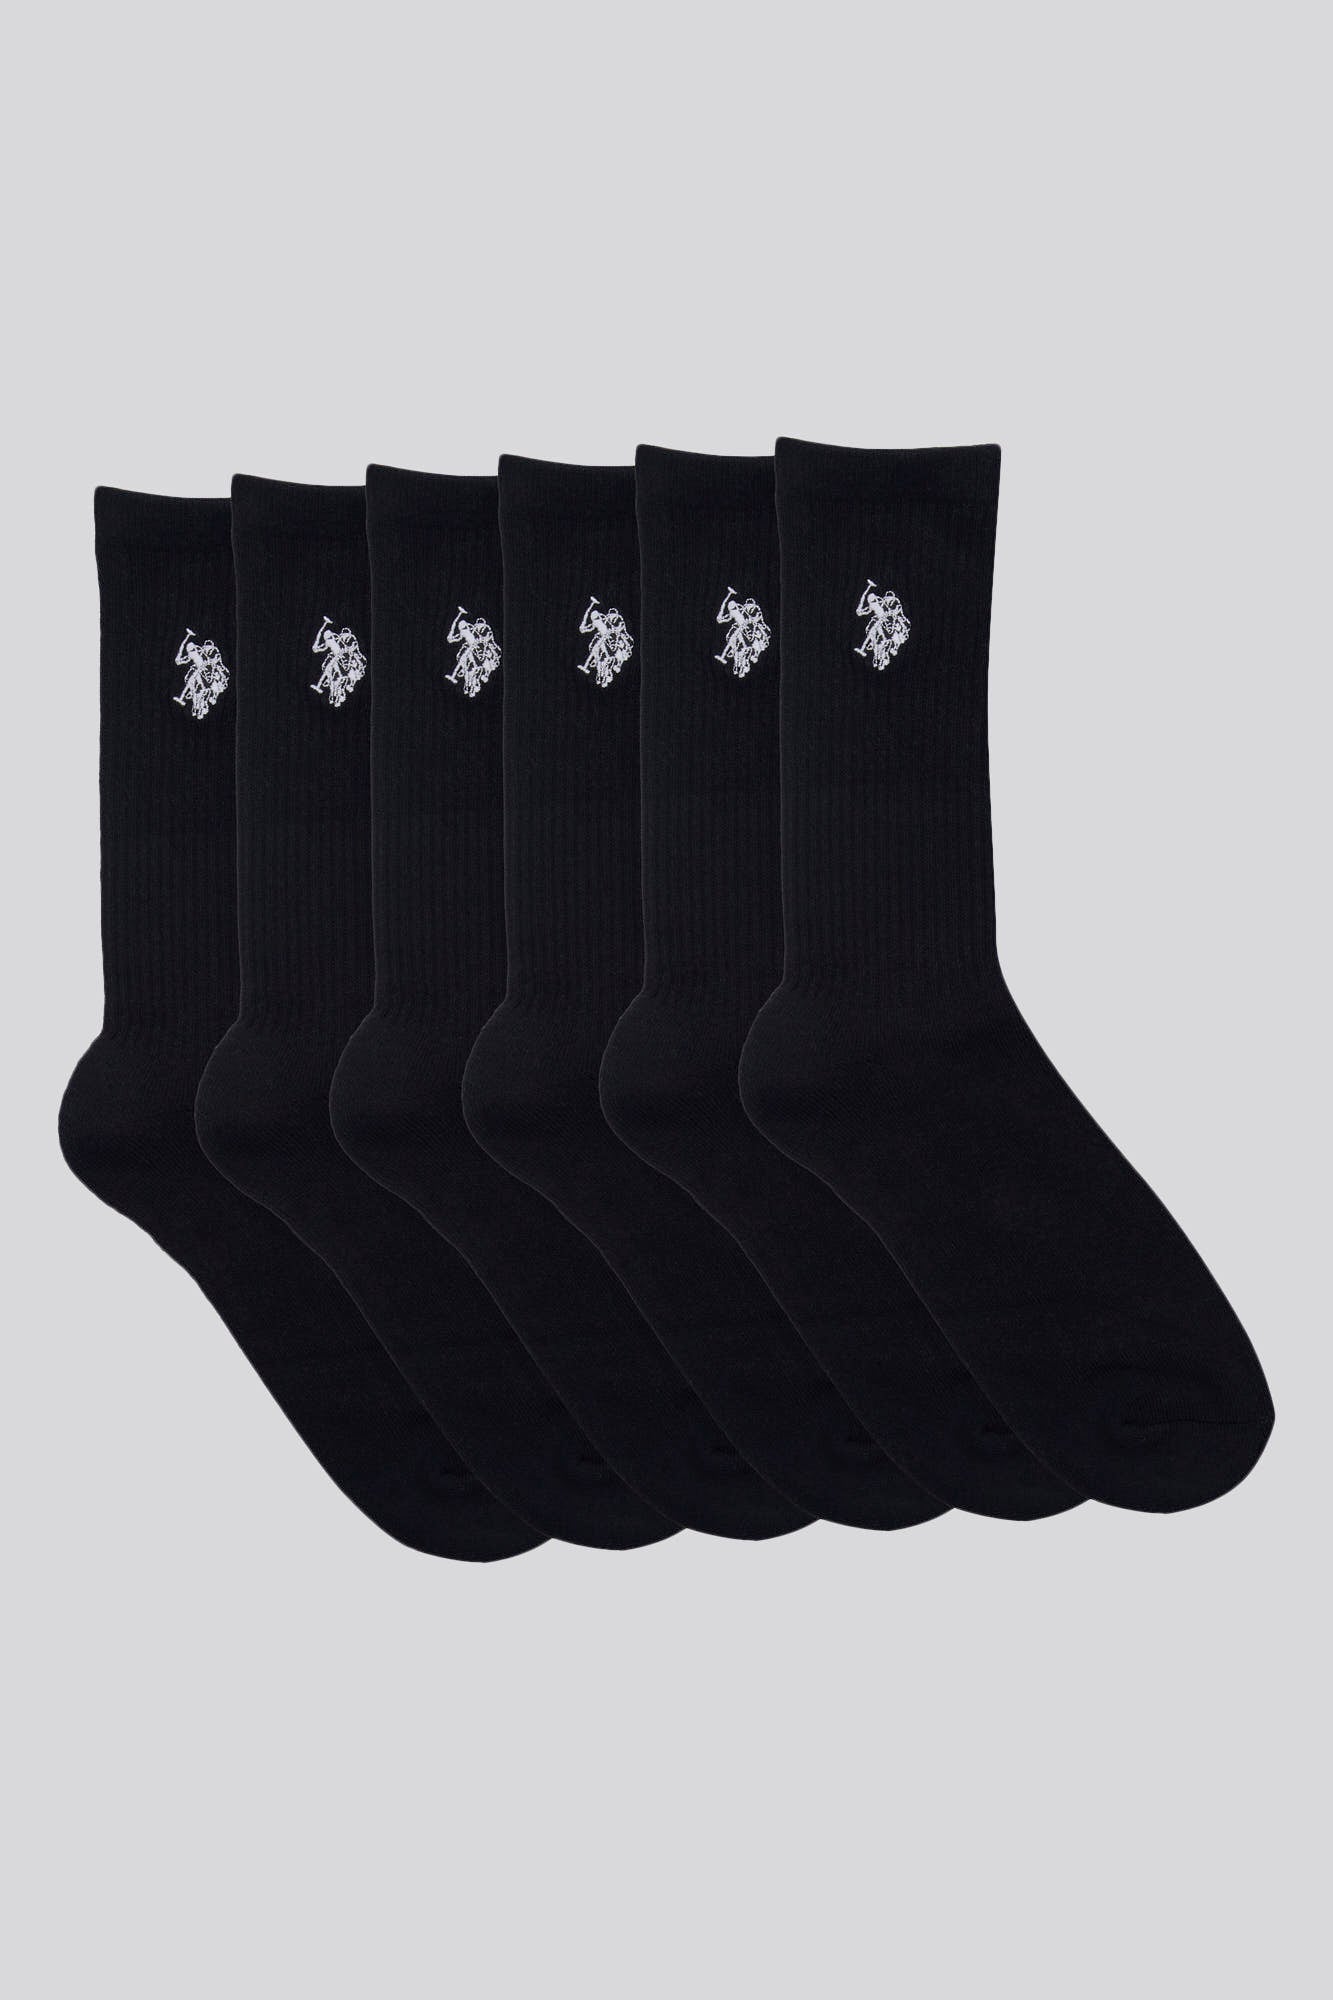 U.S. Polo Assn. Mens Five Pack Classic Sports Socks in Black